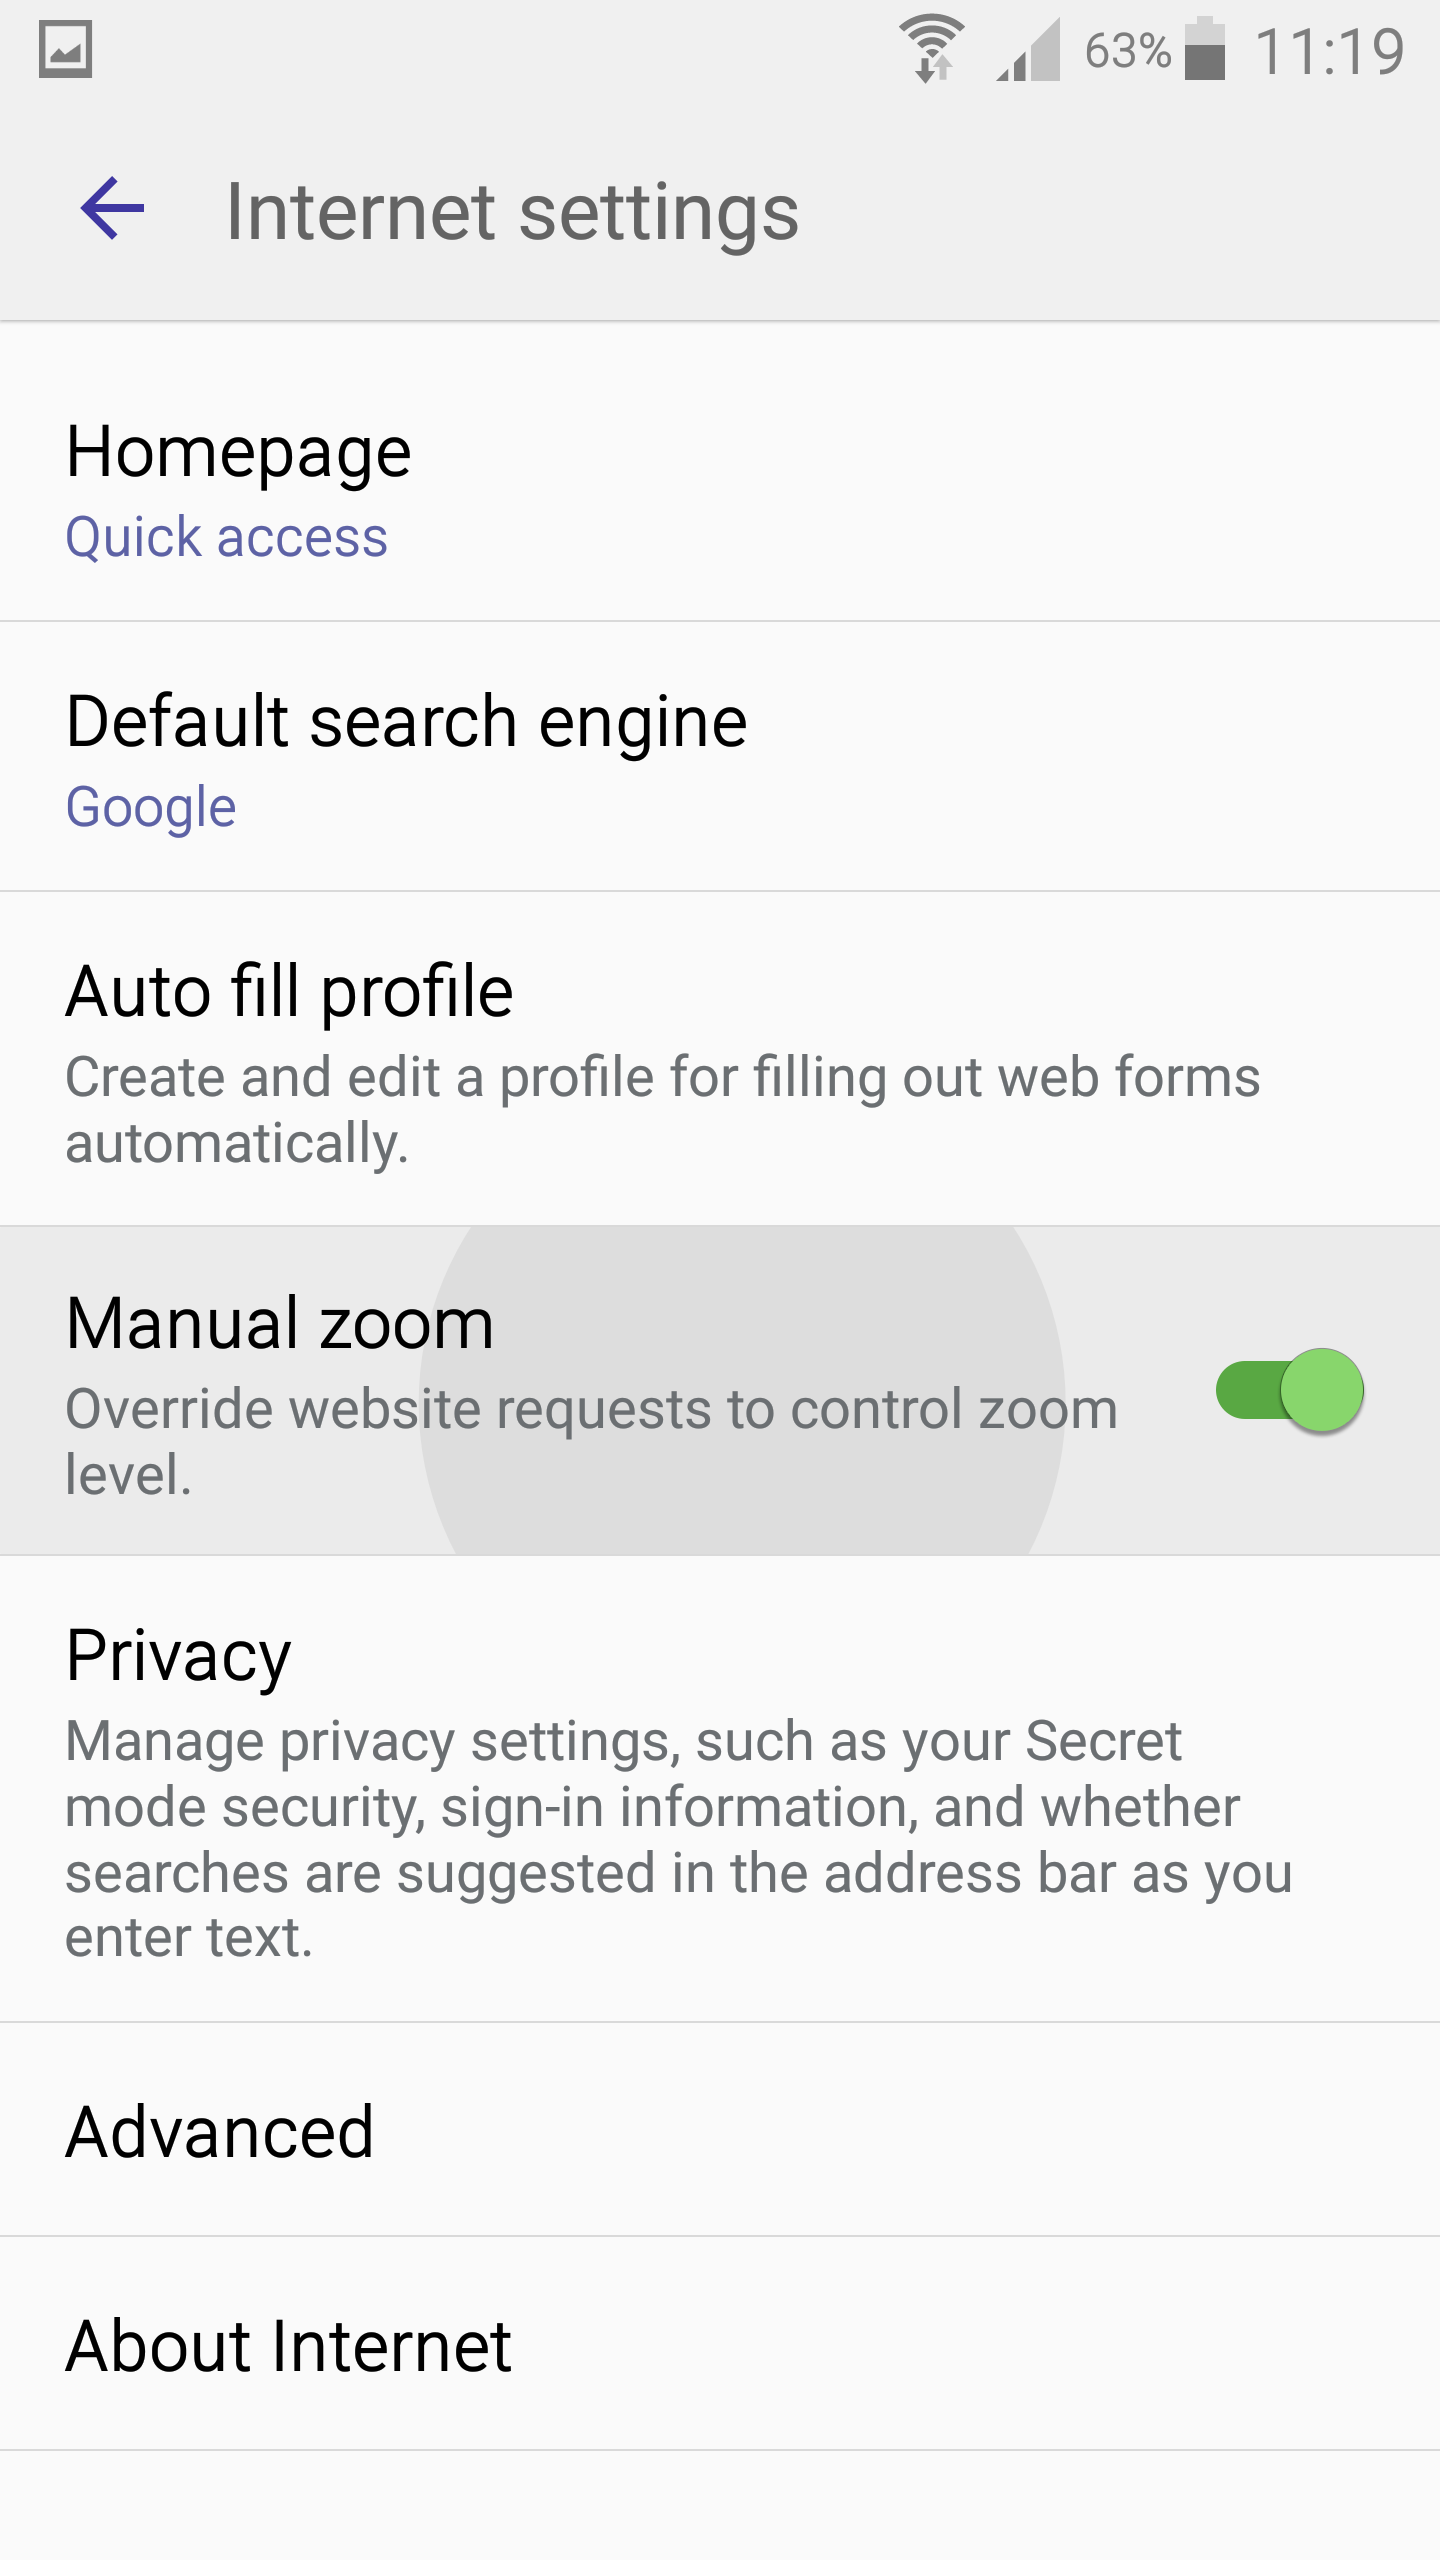 Samsung Internet's 'Manual Zoom' setting